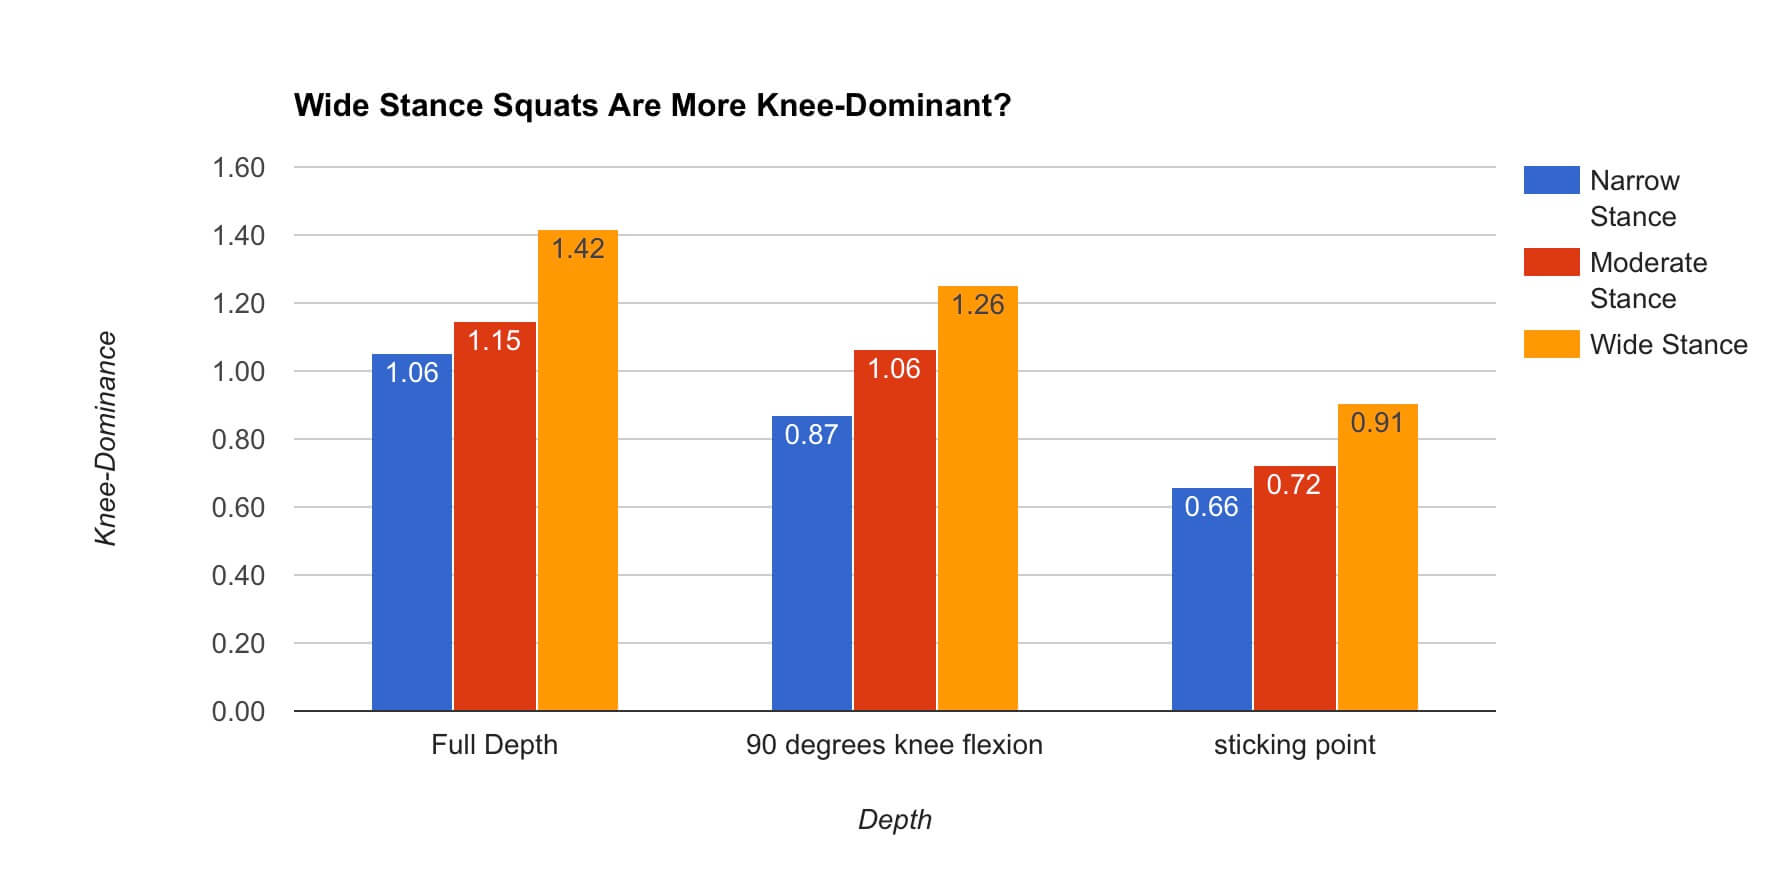 Close stance squat vs moderate stance squat vs wide stance squat knee-dominance